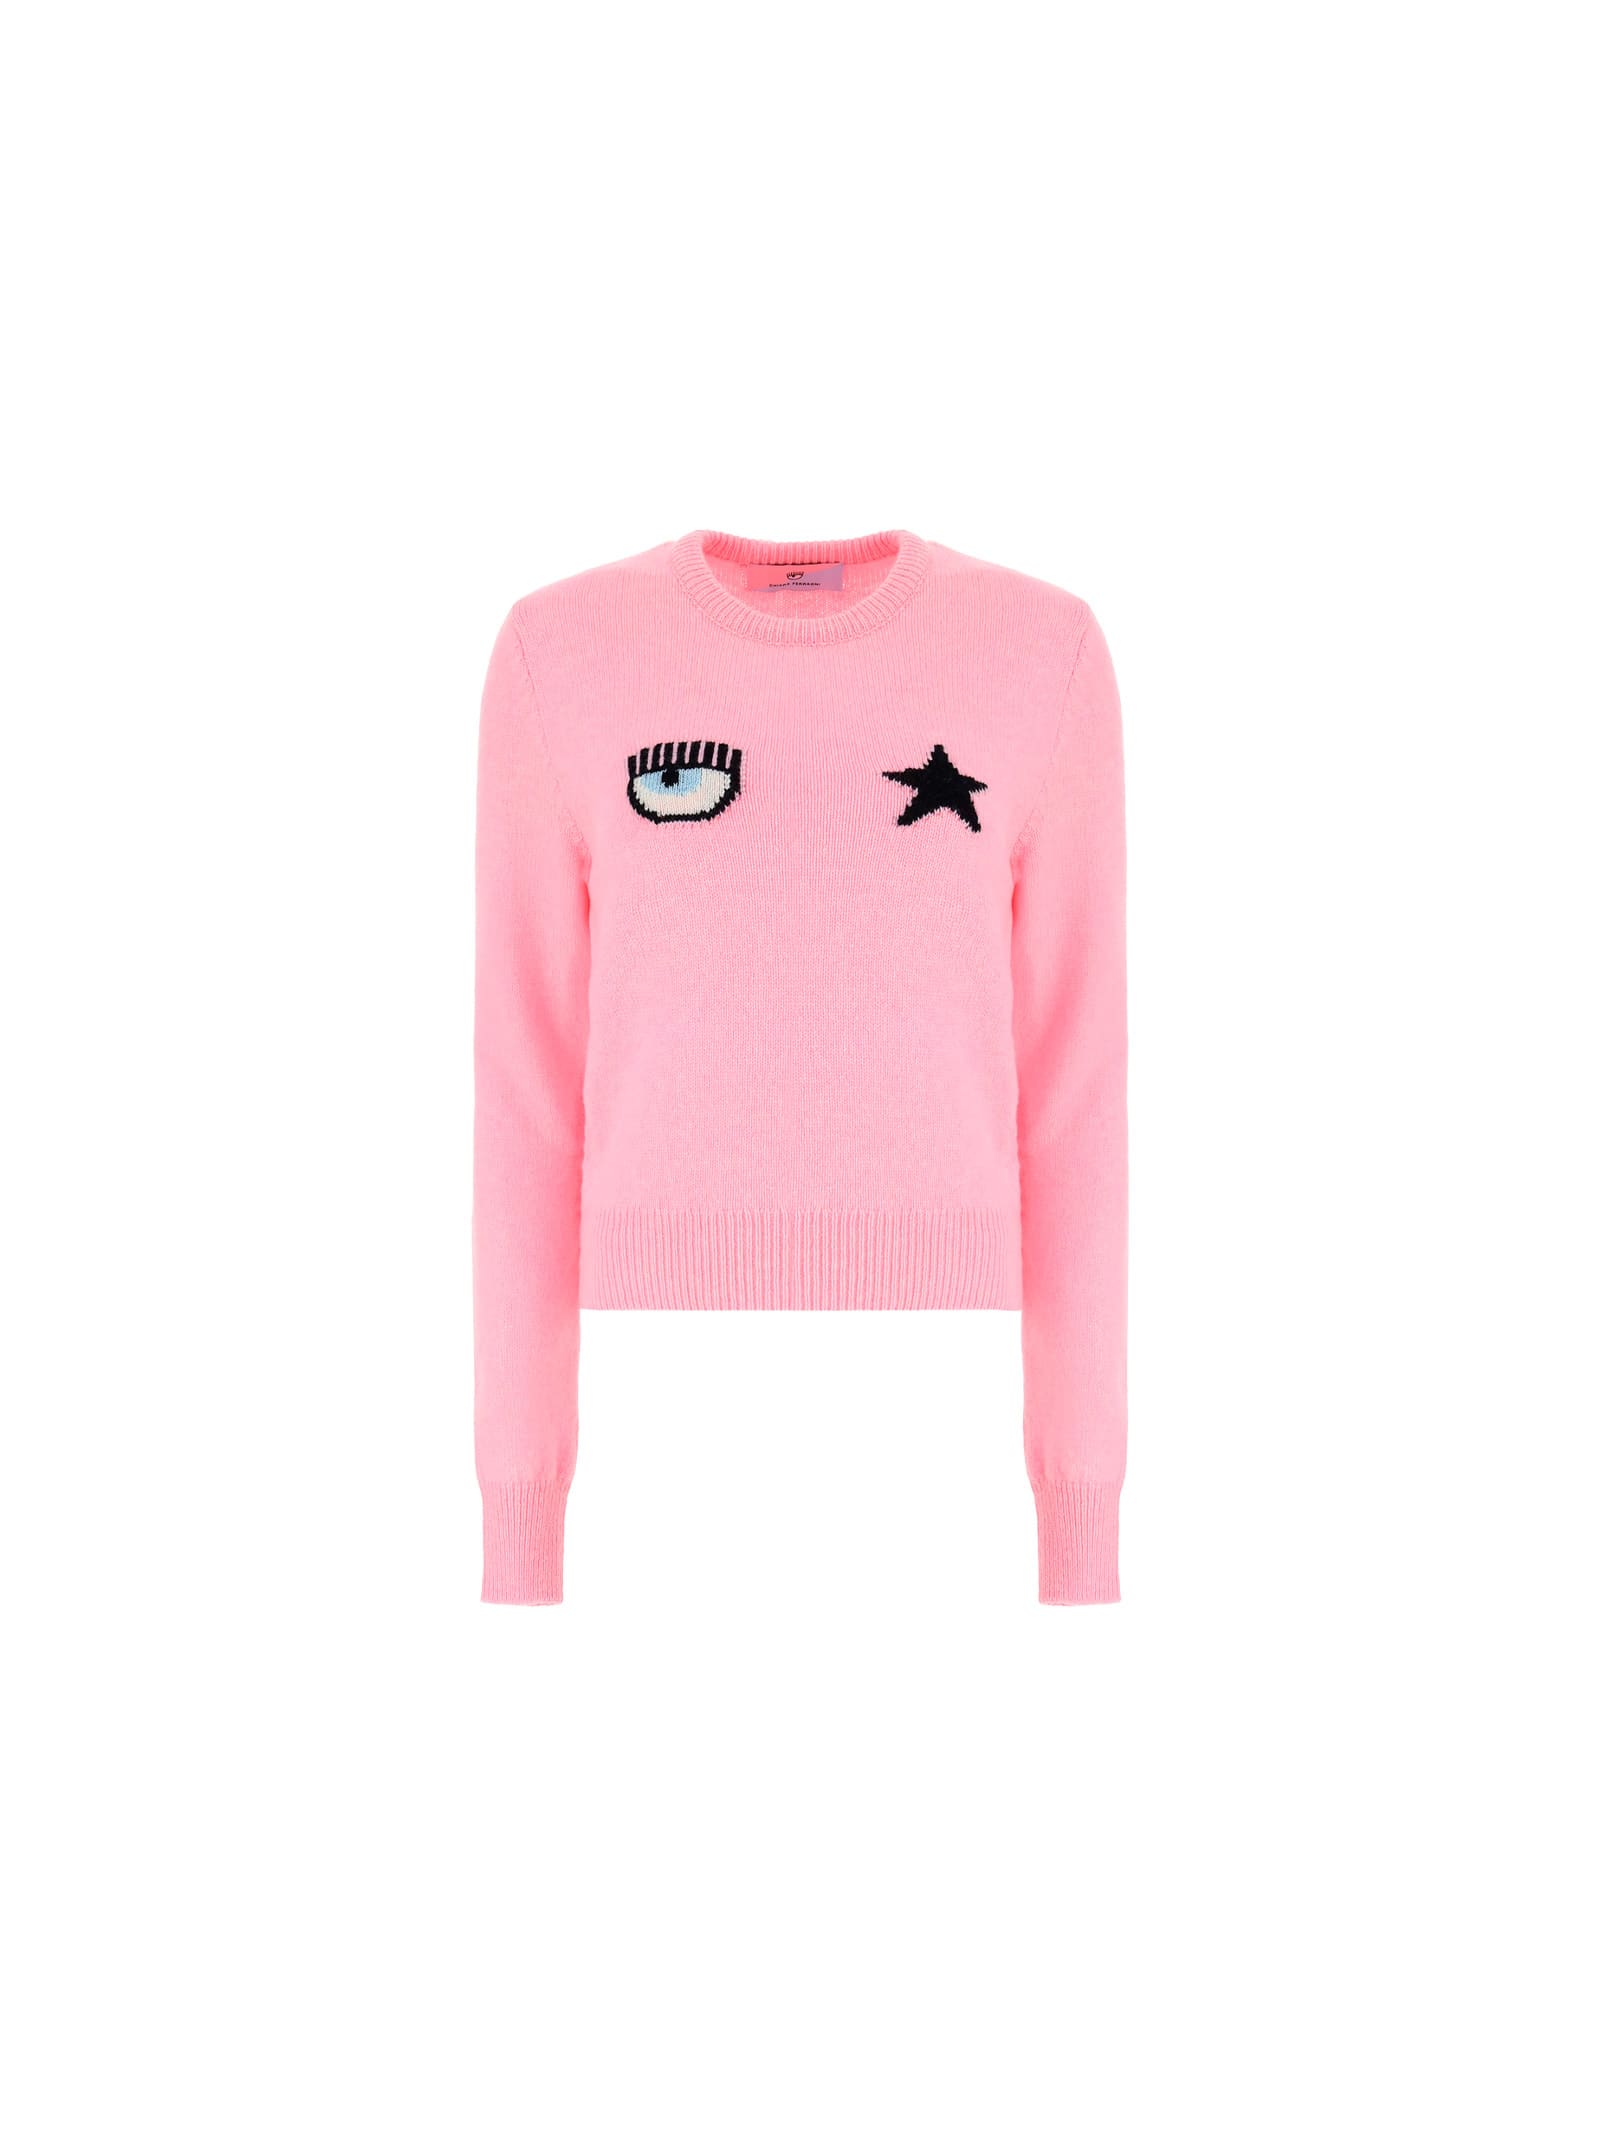 Chiara Ferragni Eyestar Sweater